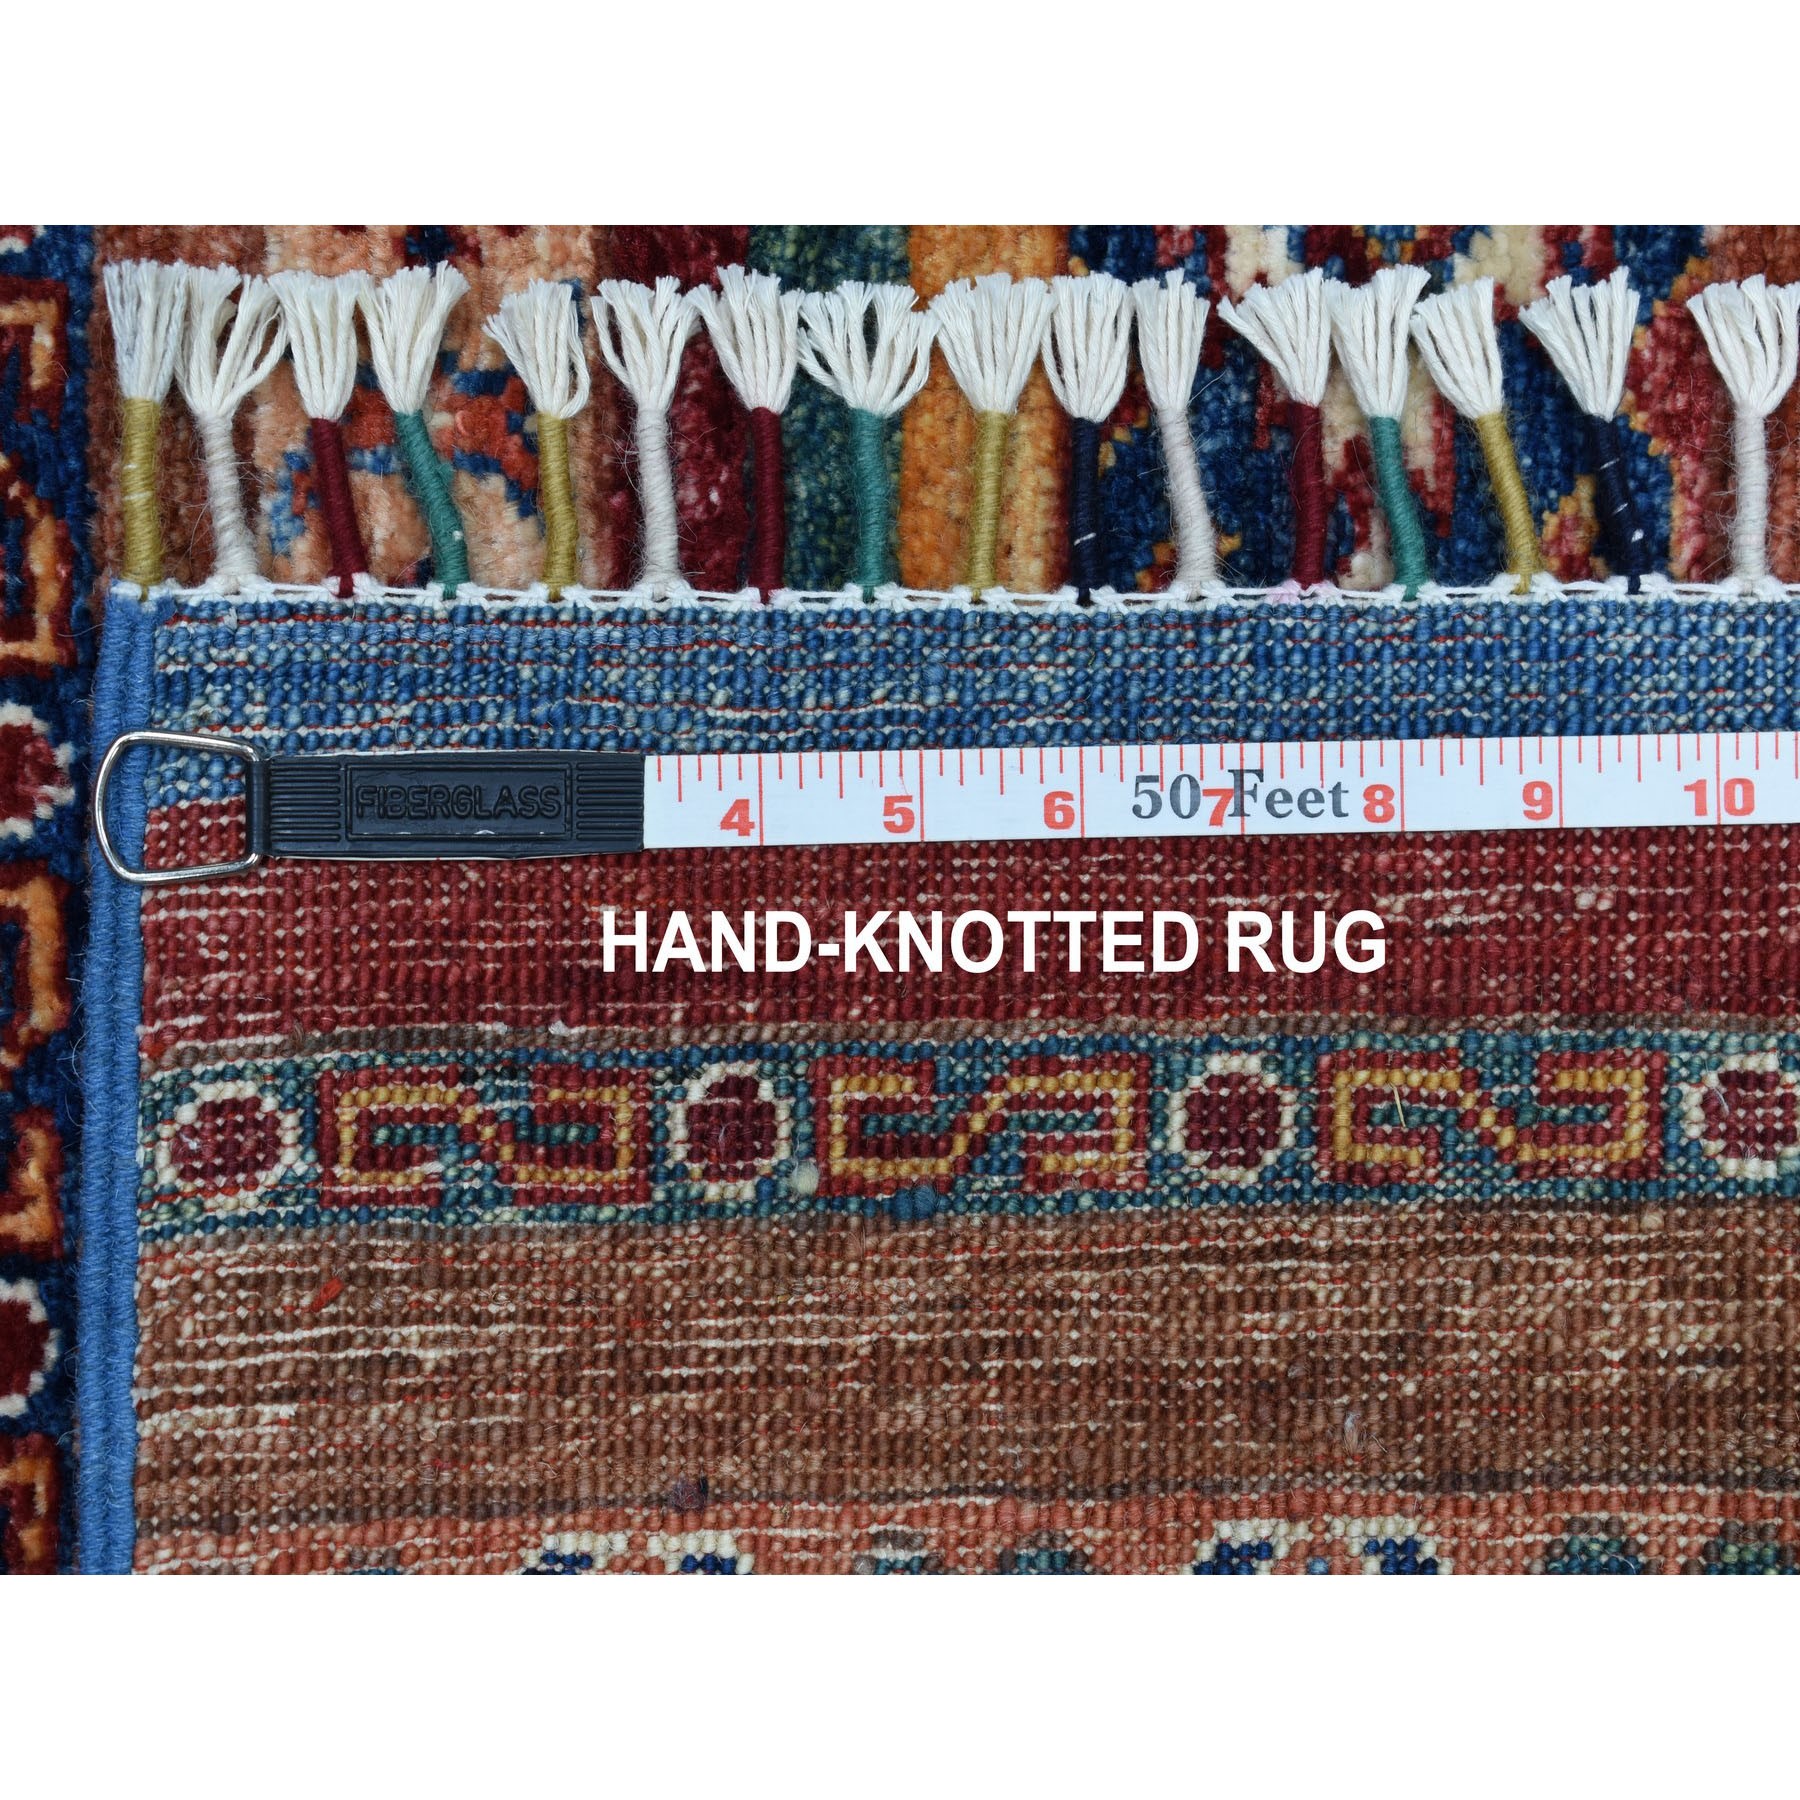 2-9 x8-2  Khorjin Design Runner Red Super Kazak Tribal Hand Knotted Pure Wool Oriental Rug 